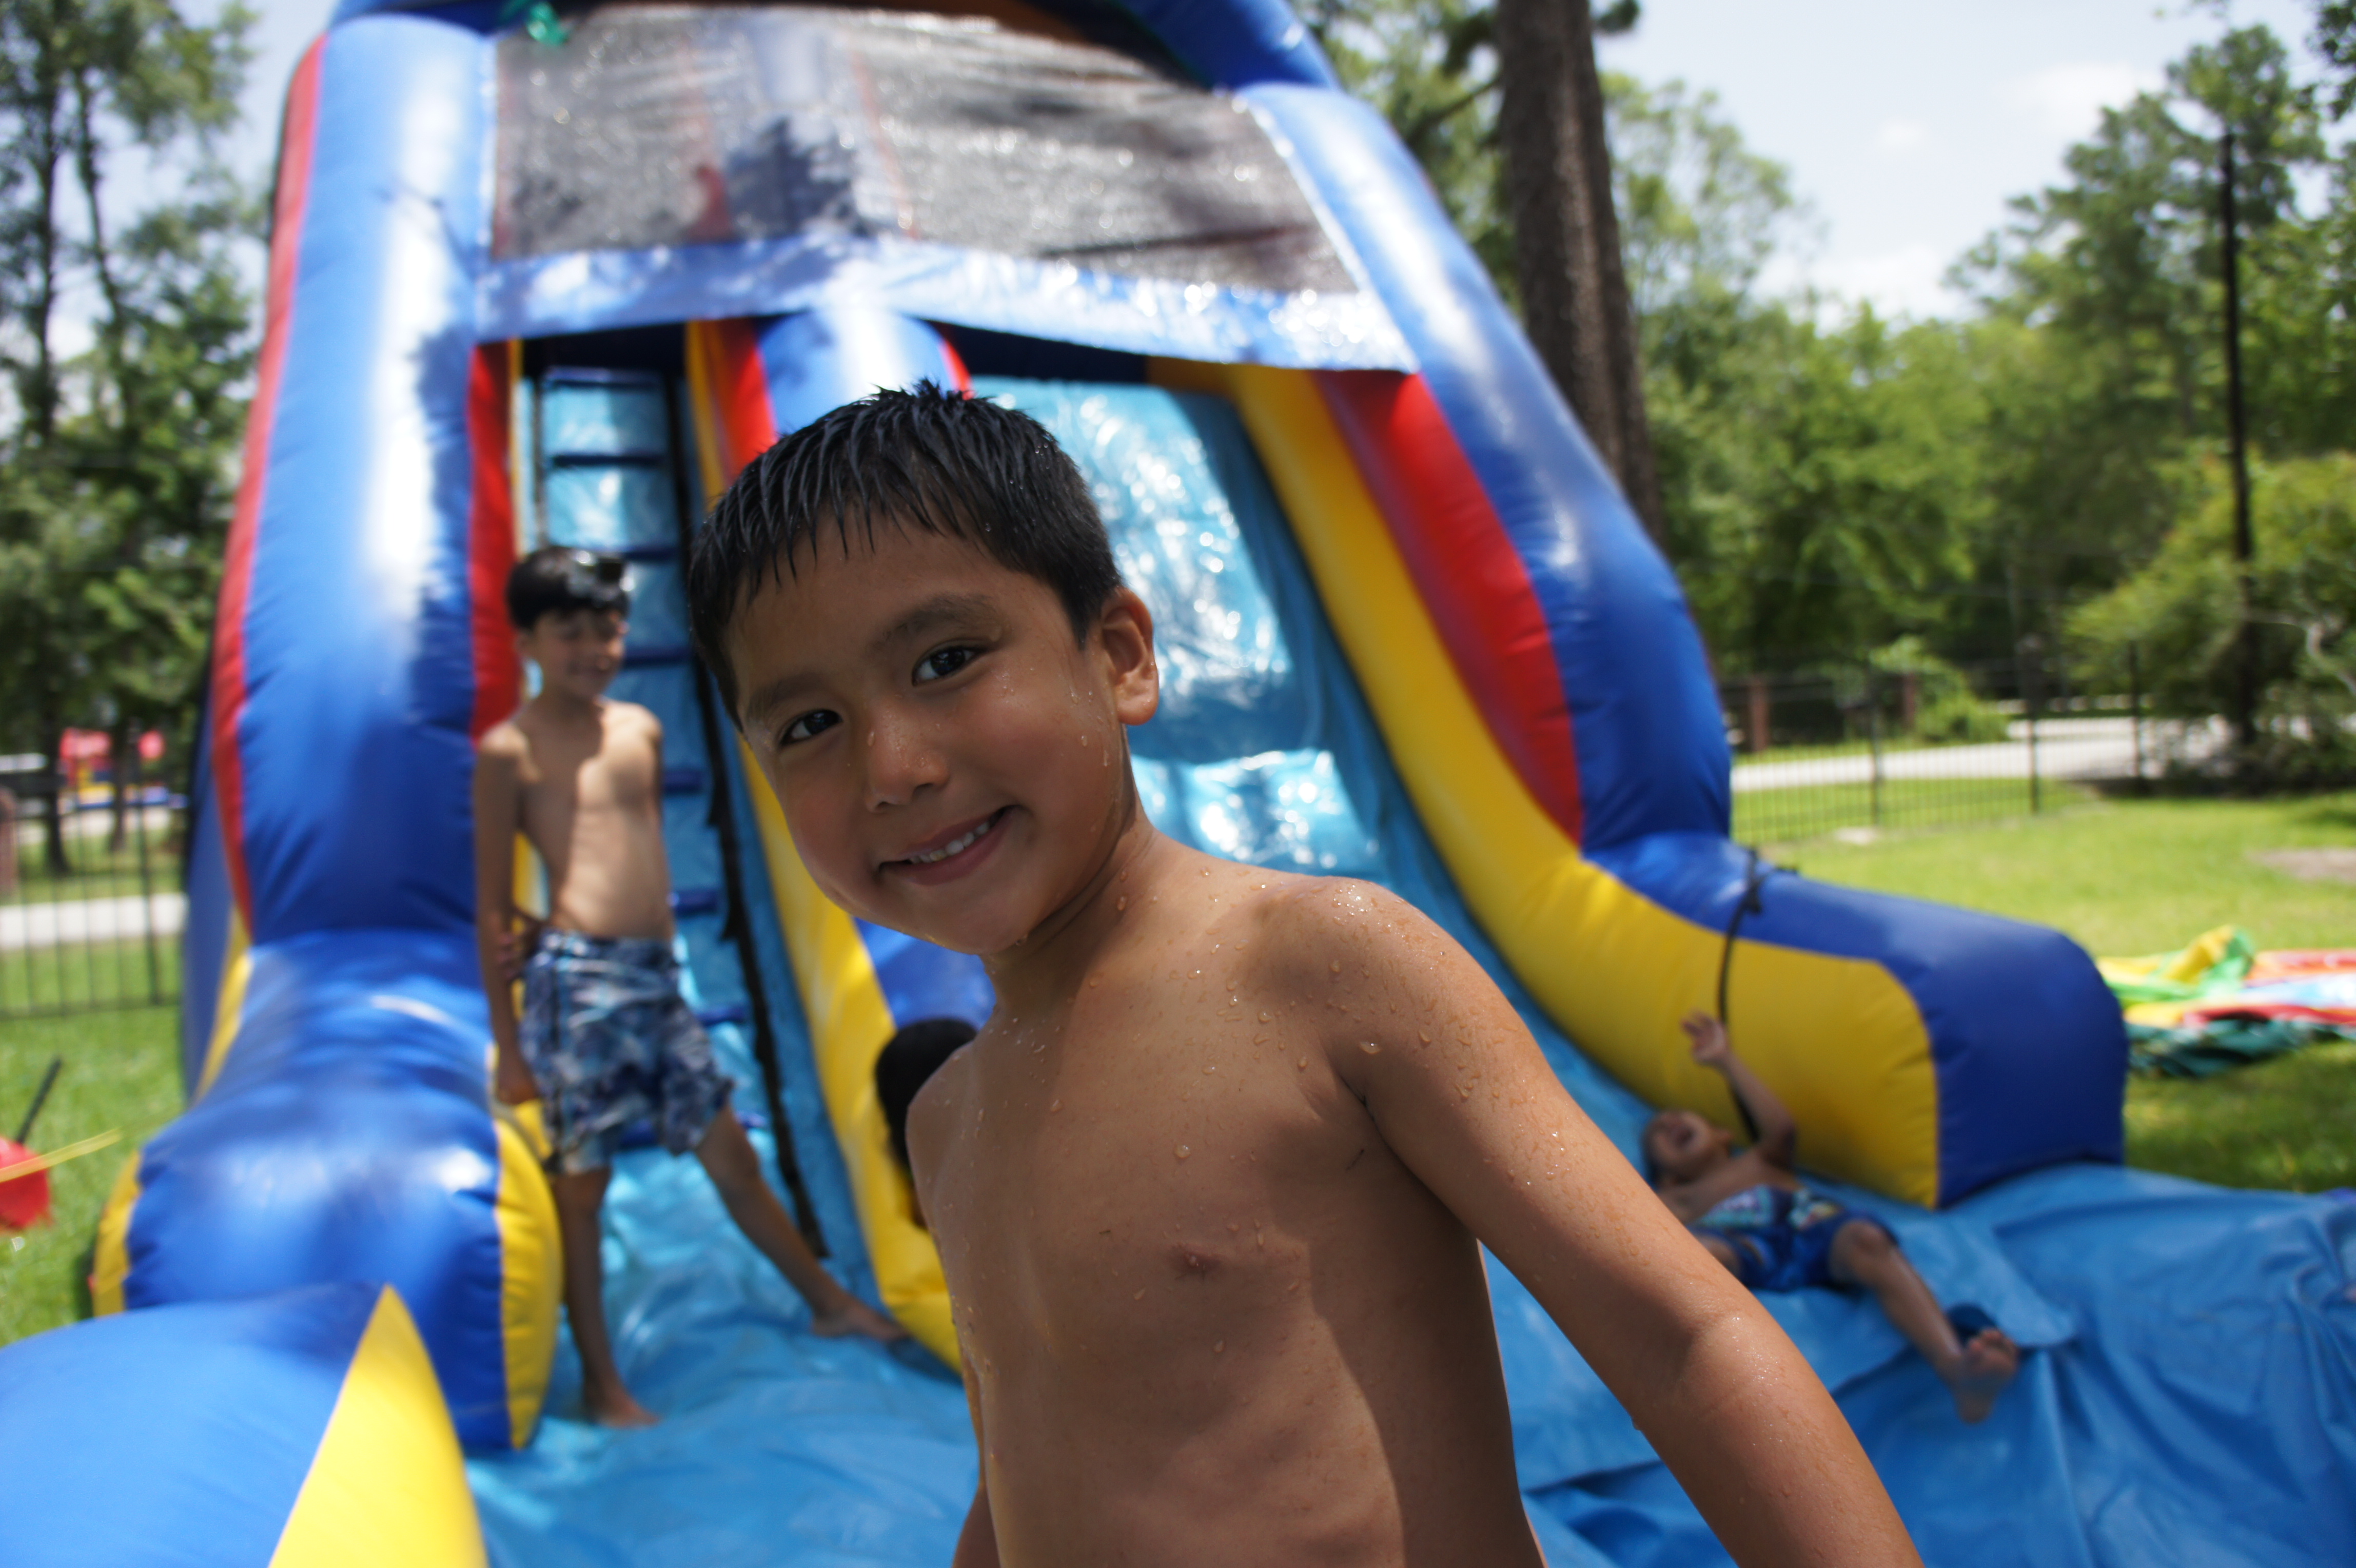 Water Slide Event Party rentals in Houston, TX & surrounding cities